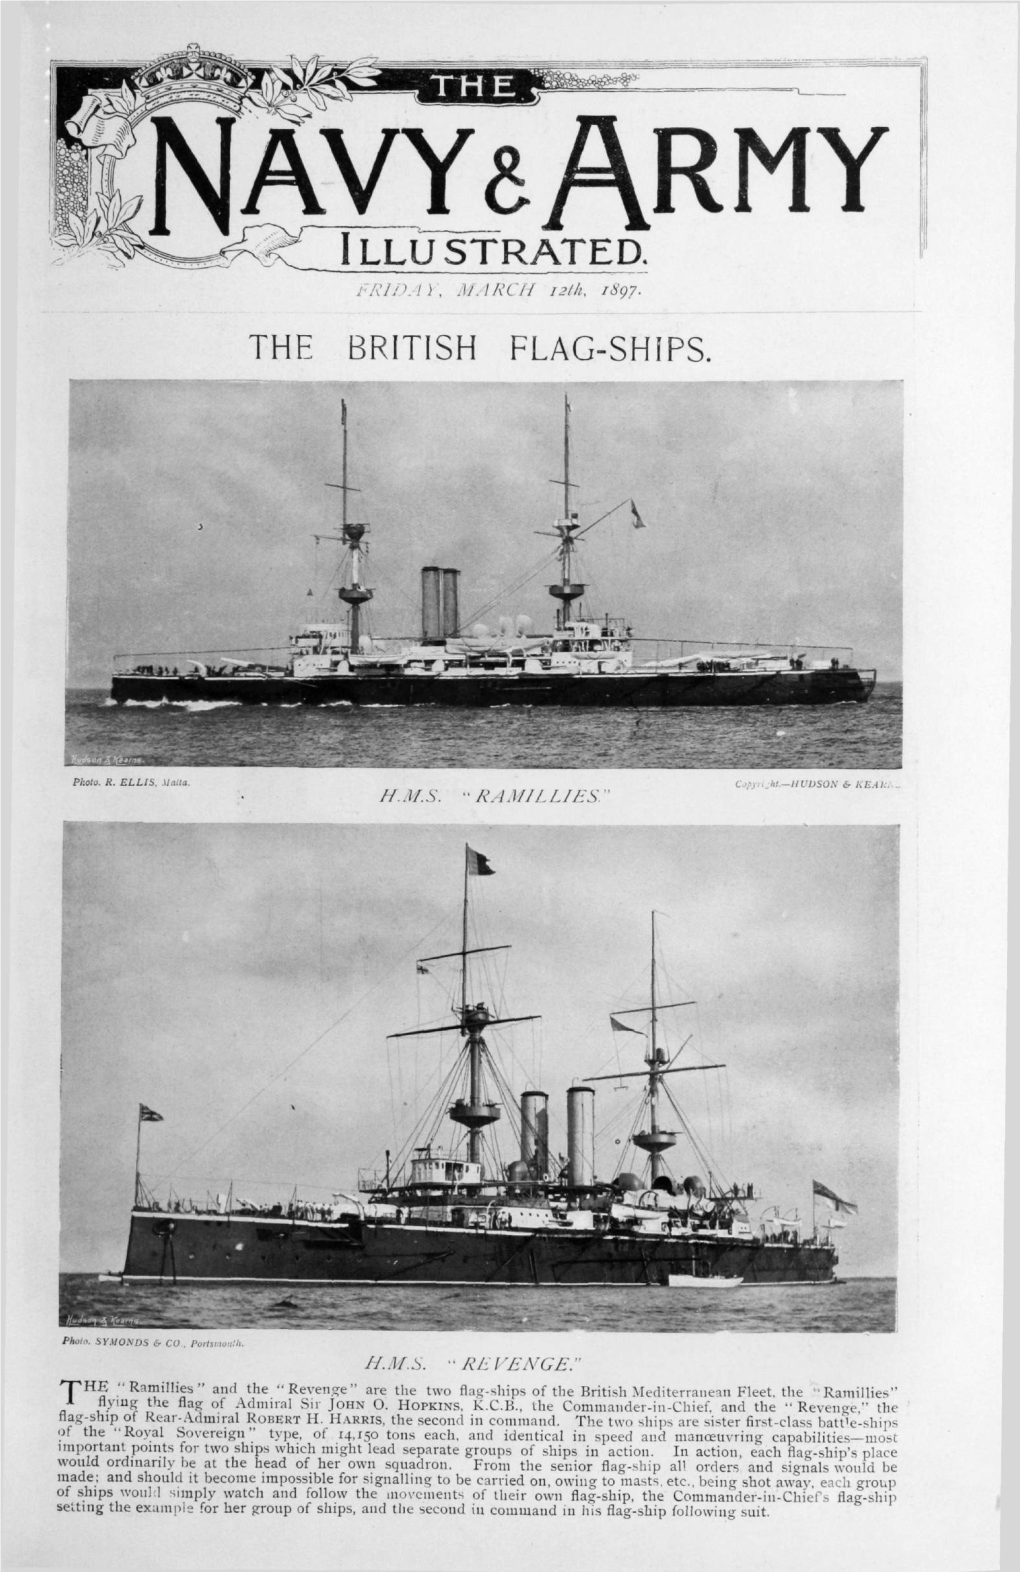 The British Flag-Ships